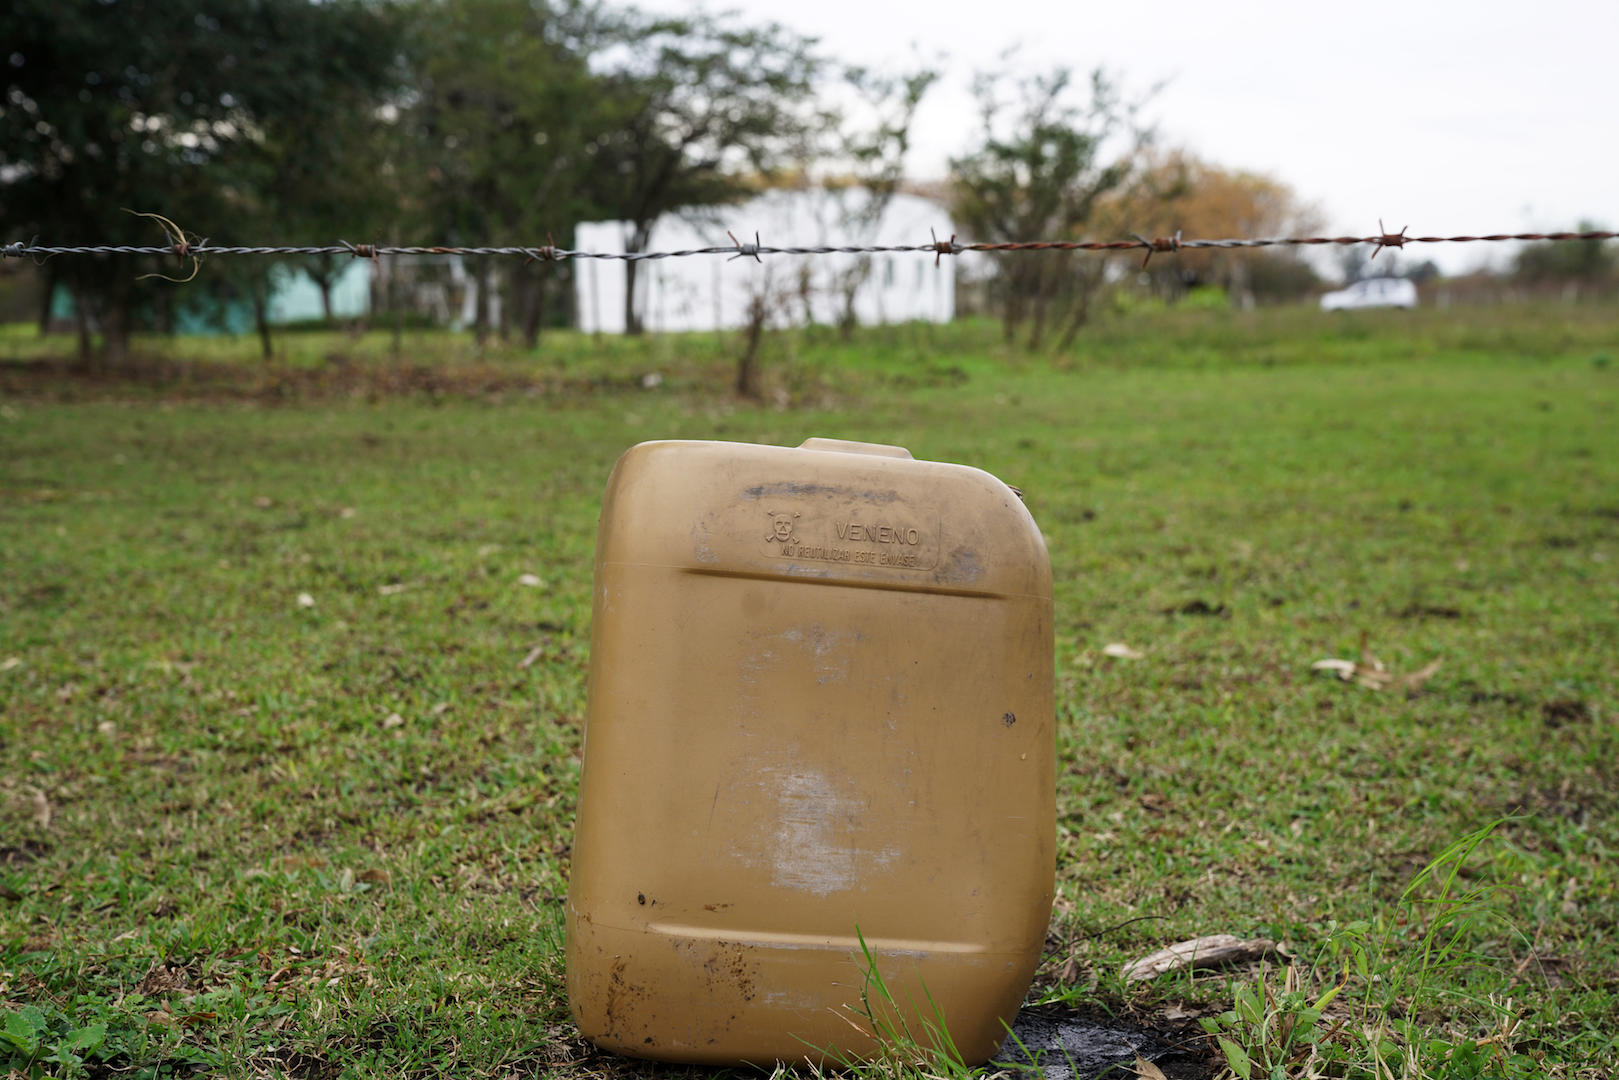 fertiliser canister in a field in argentina